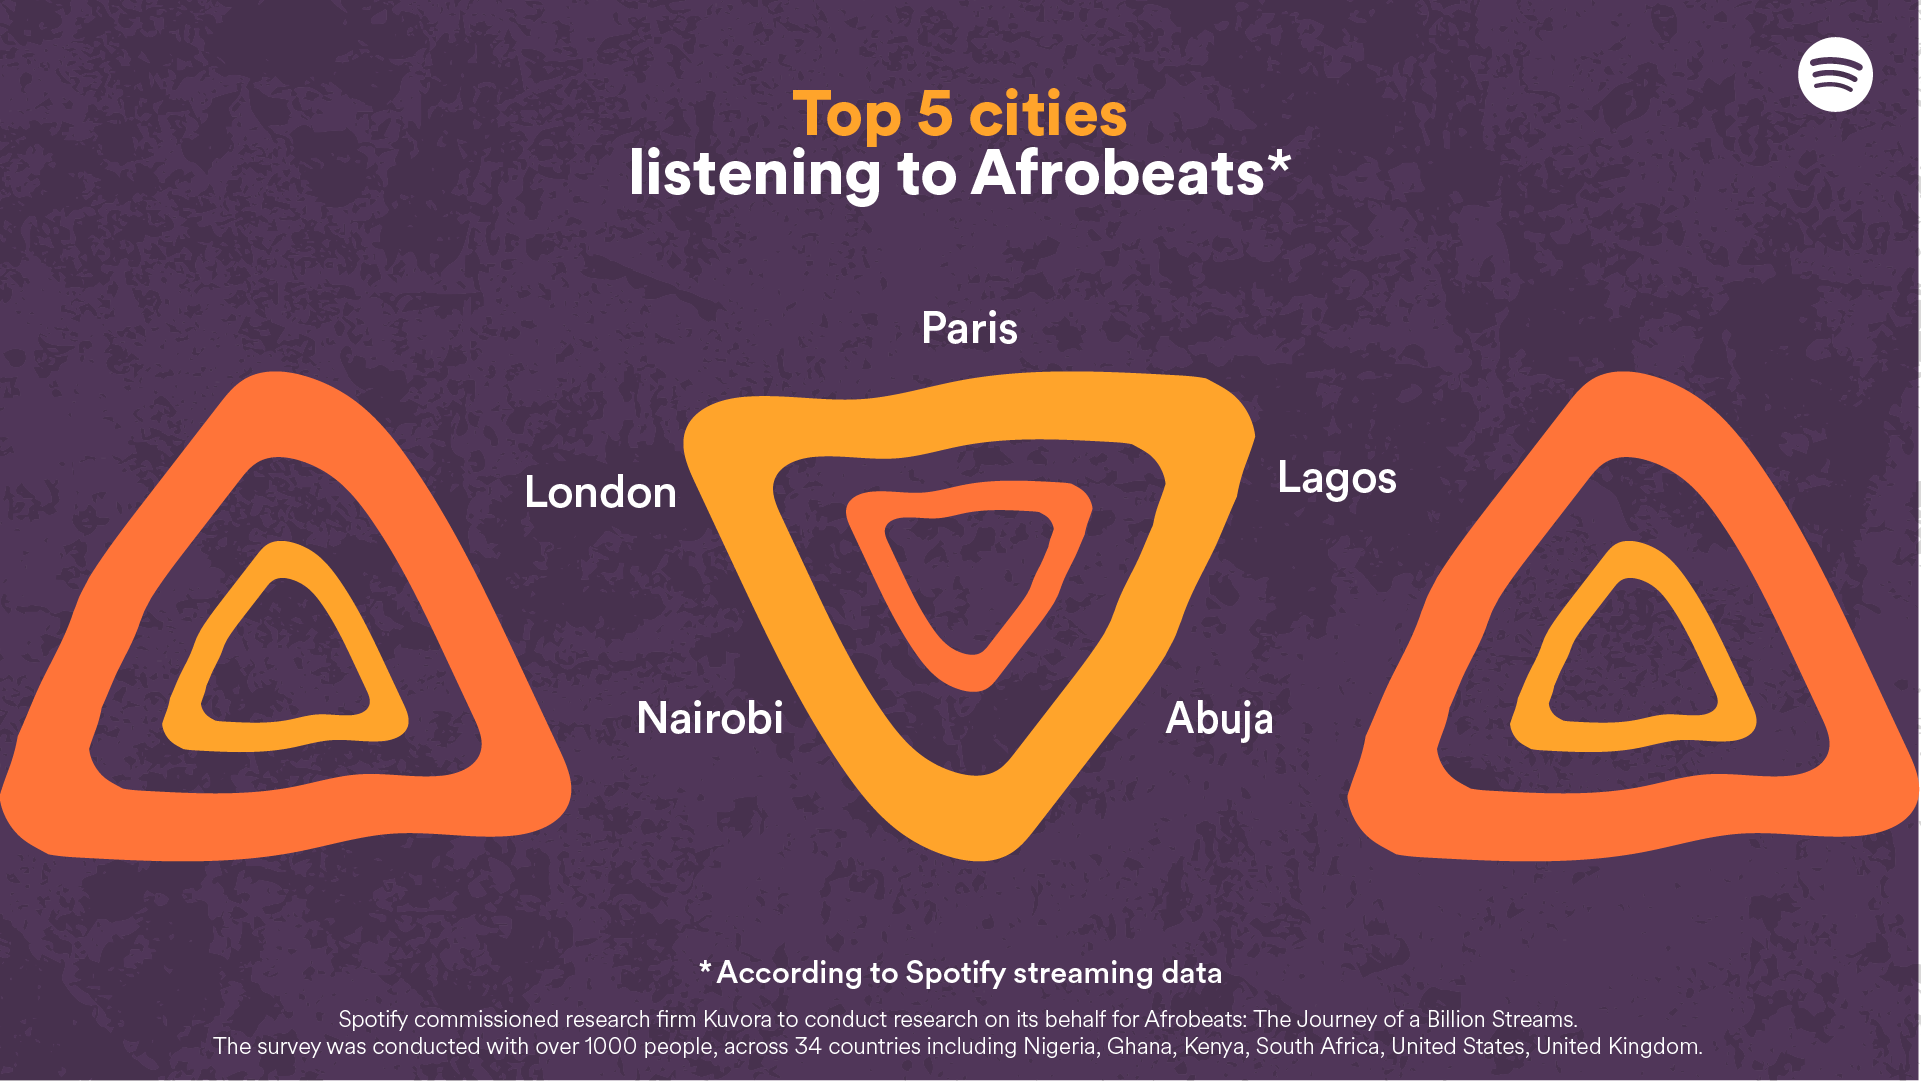 Afrobeats’ Evolution: New updates to Spotify’s Journey of a Billion Streams site